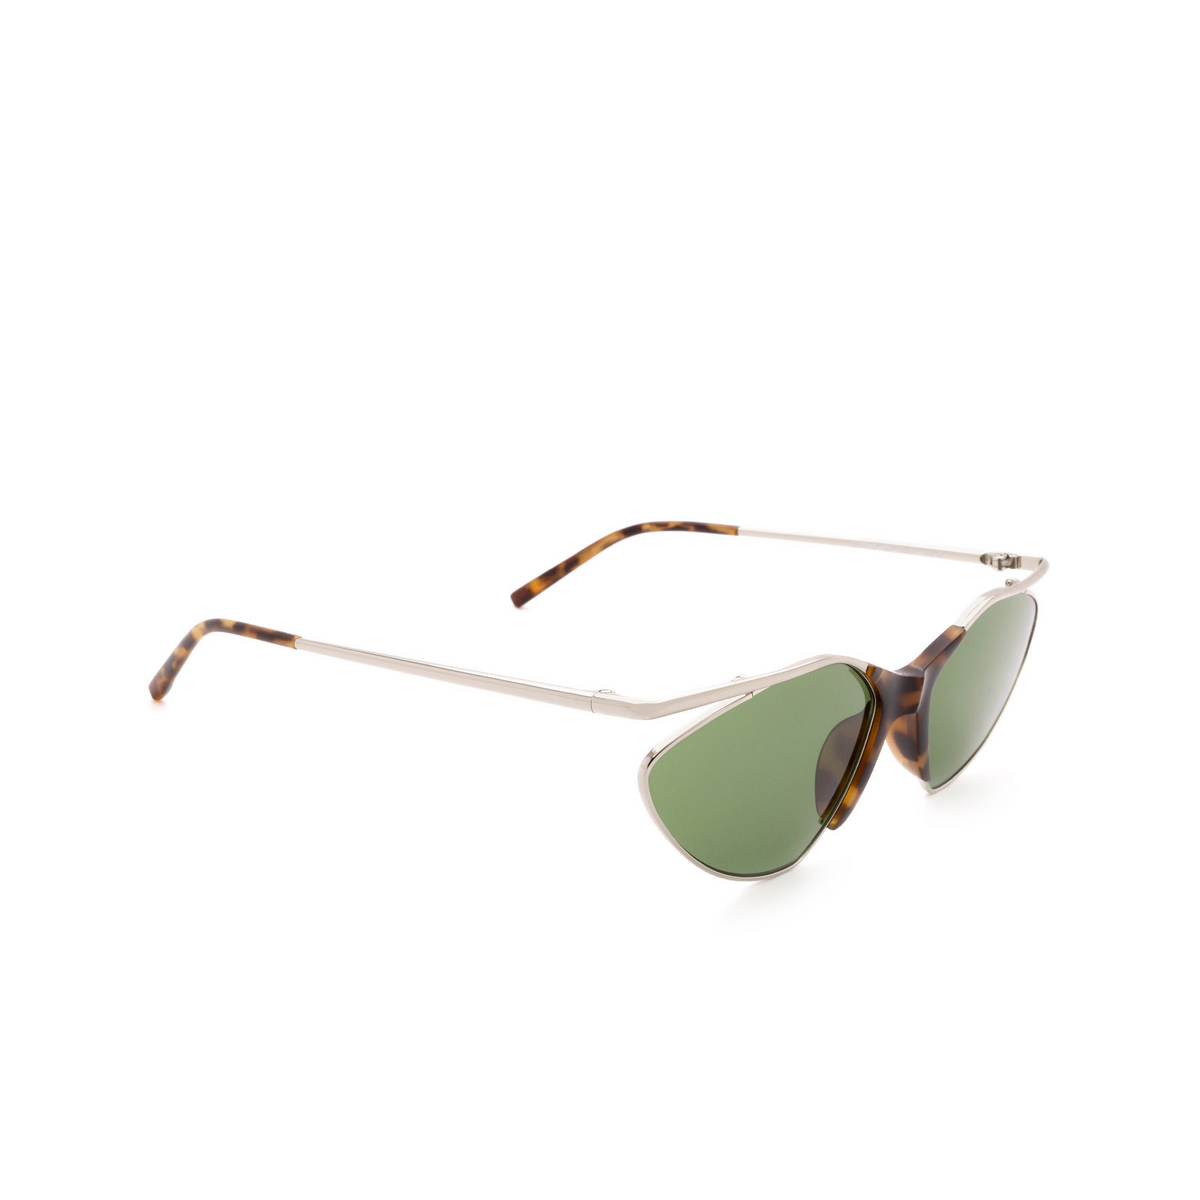 Sportmax® Cat-eye Sunglasses: SM0019 color Shiny Palladium 16N - three-quarters view.